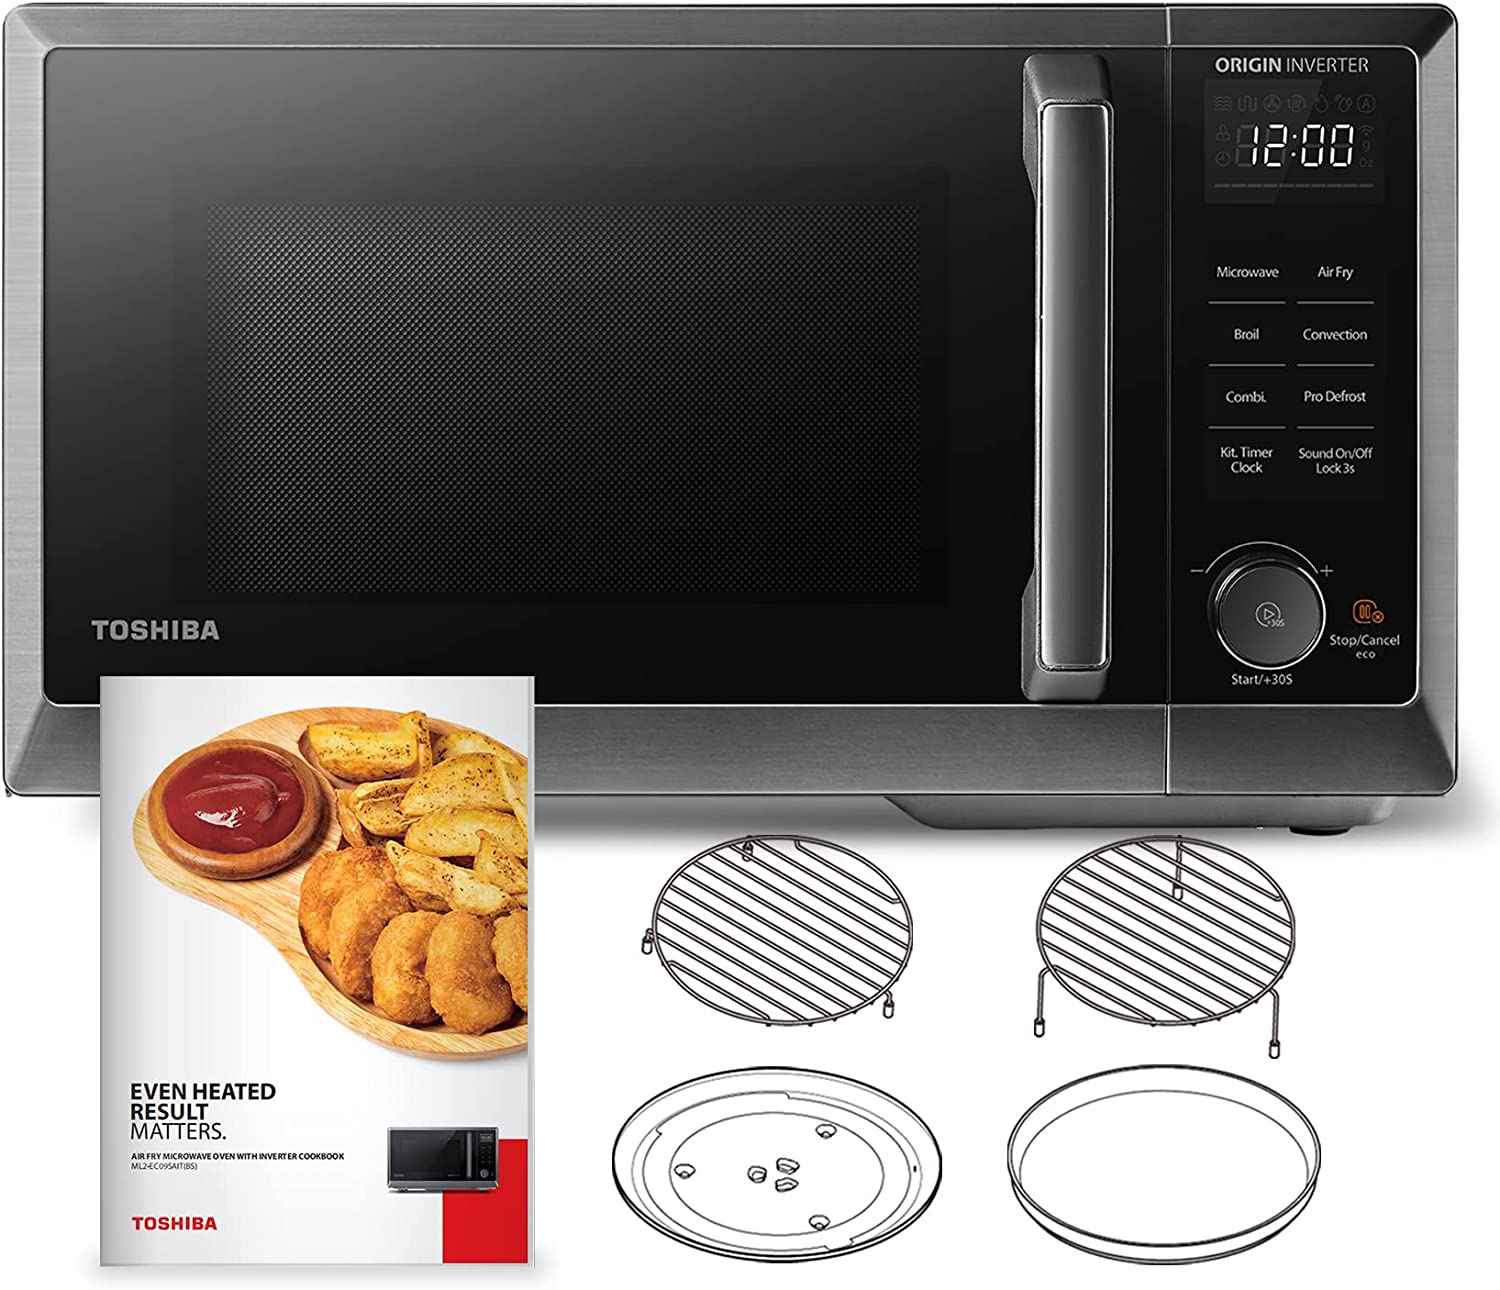 TOSHIBA Inverter Microwave Toaster Oven